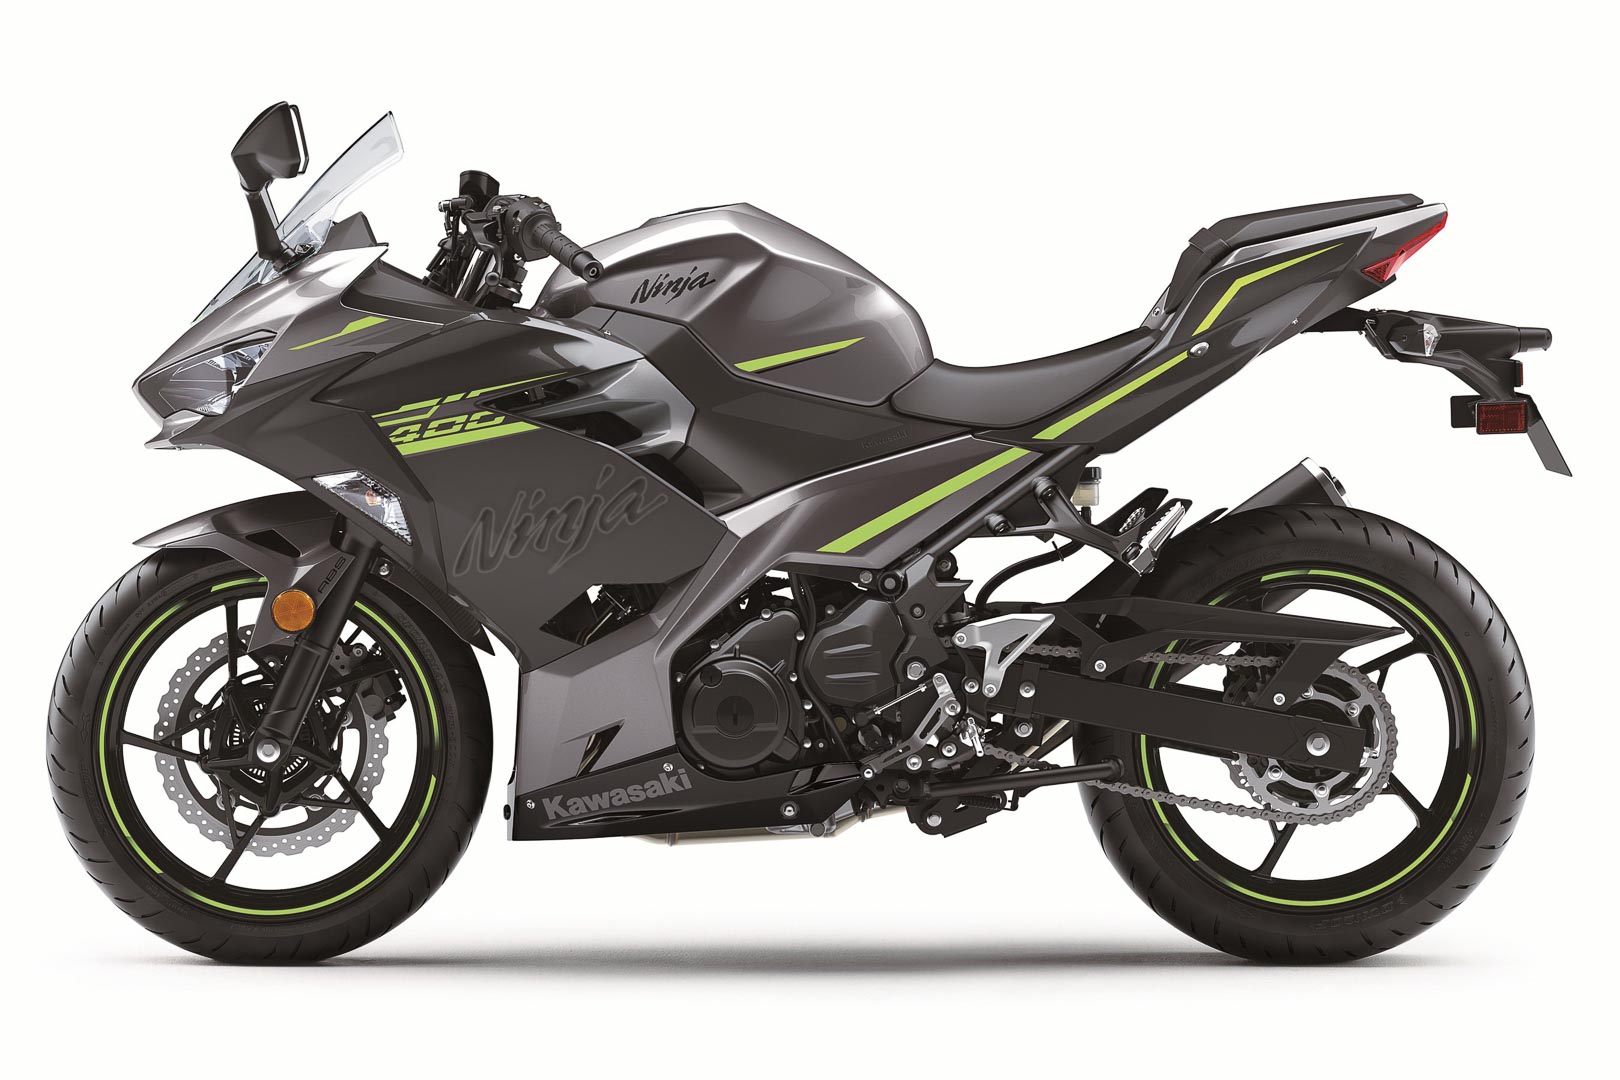 2021 Kawasaki Ninja 400 Buyers Guide beginner sport motorcycle 4